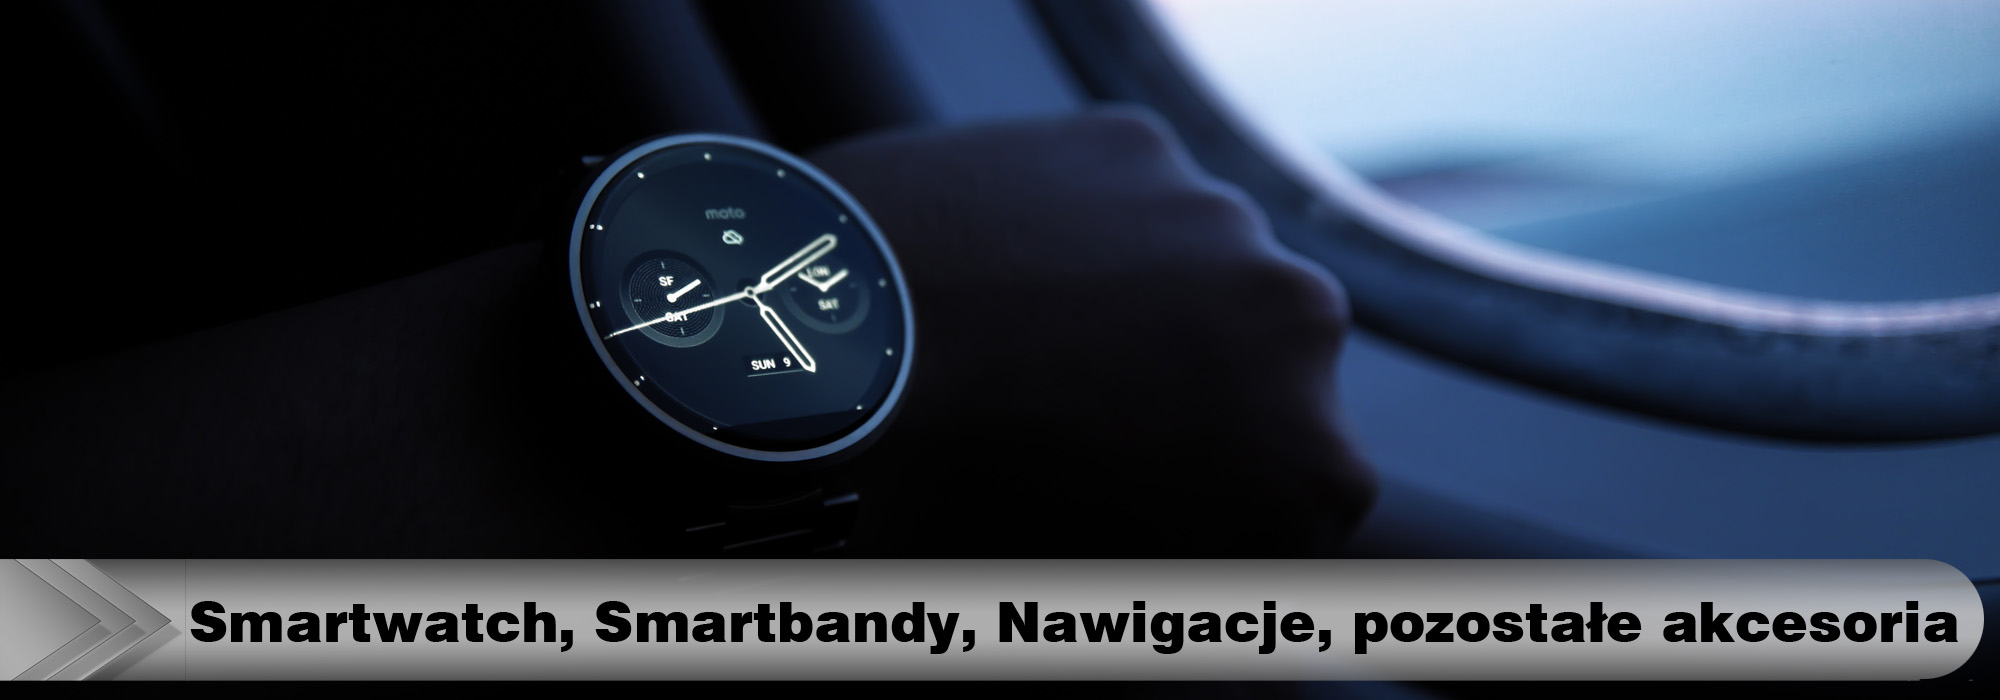 smartwatch smartband itp